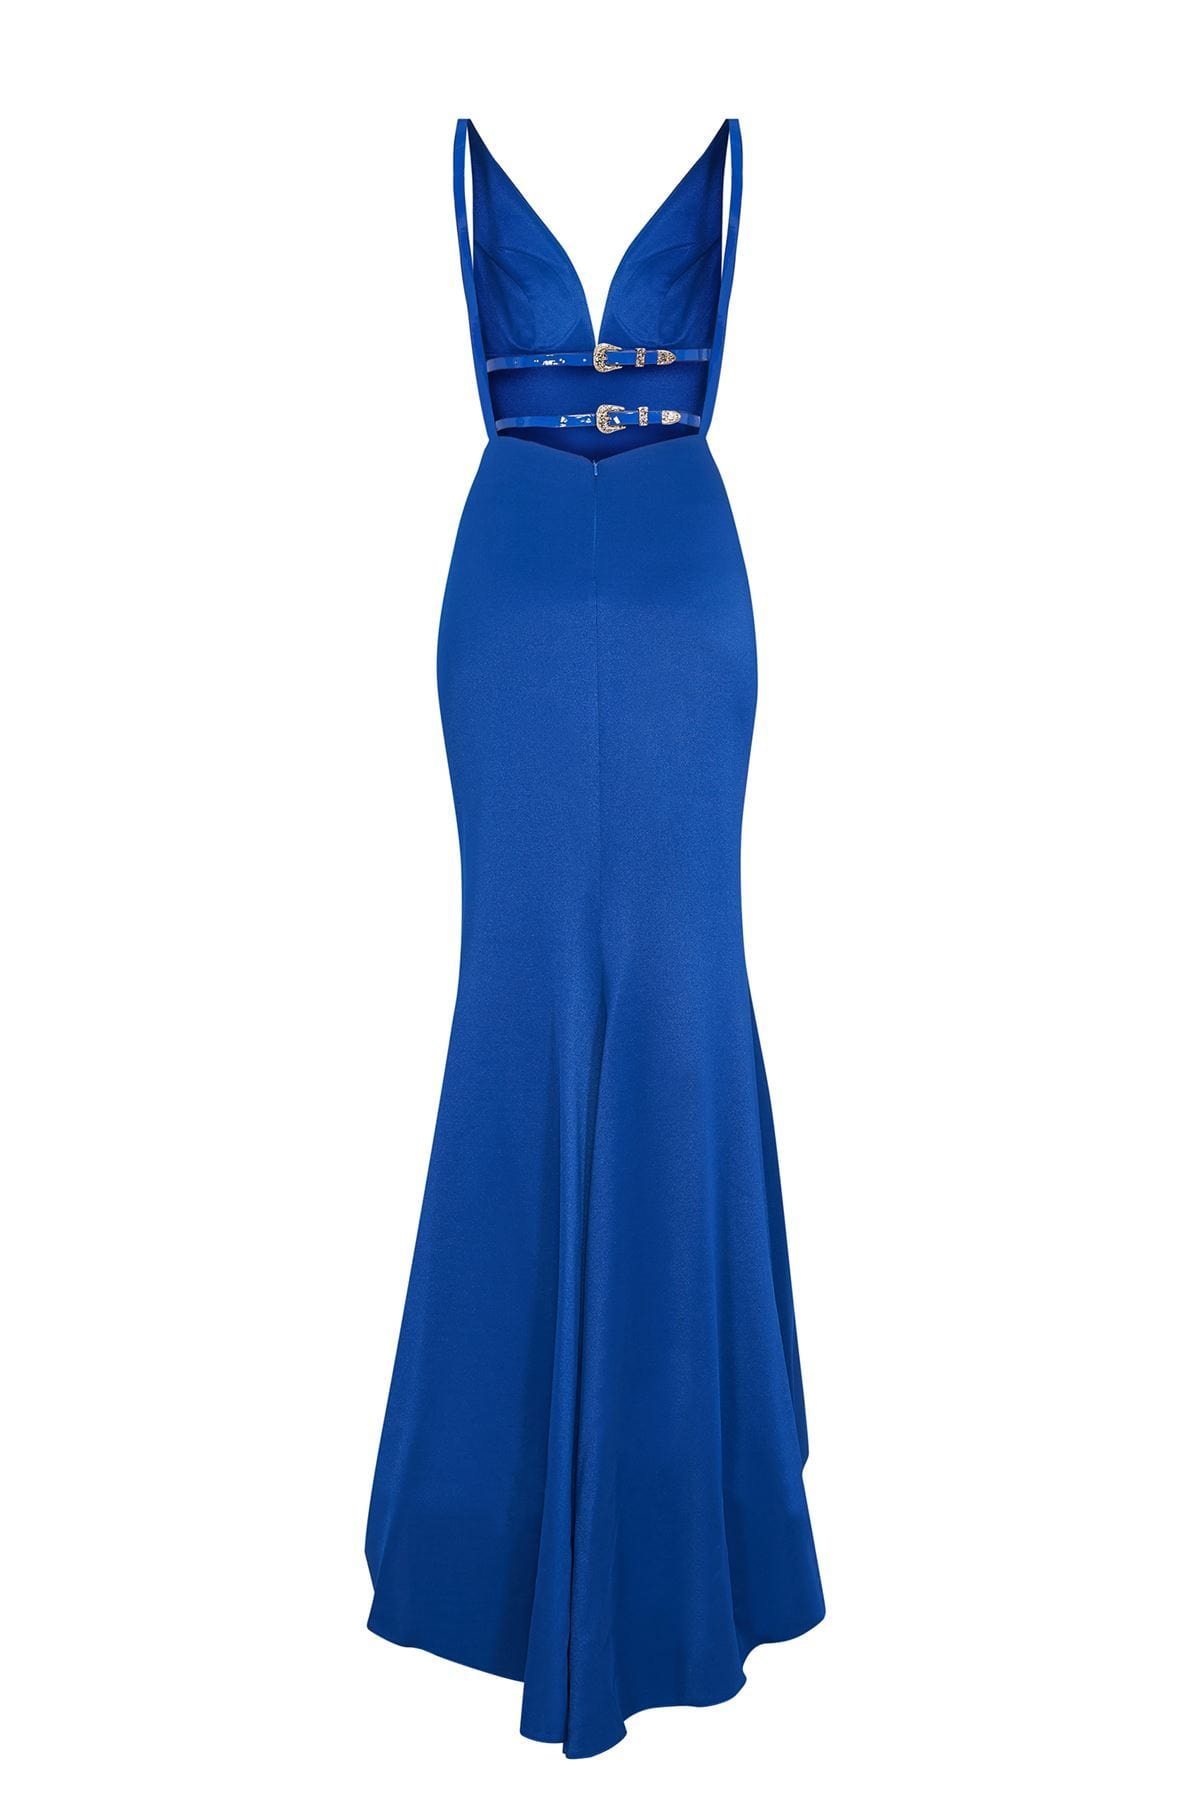 Tarik Ediz - 50483 Plunging Belt-Detailed Backless Gown Evening Dresses